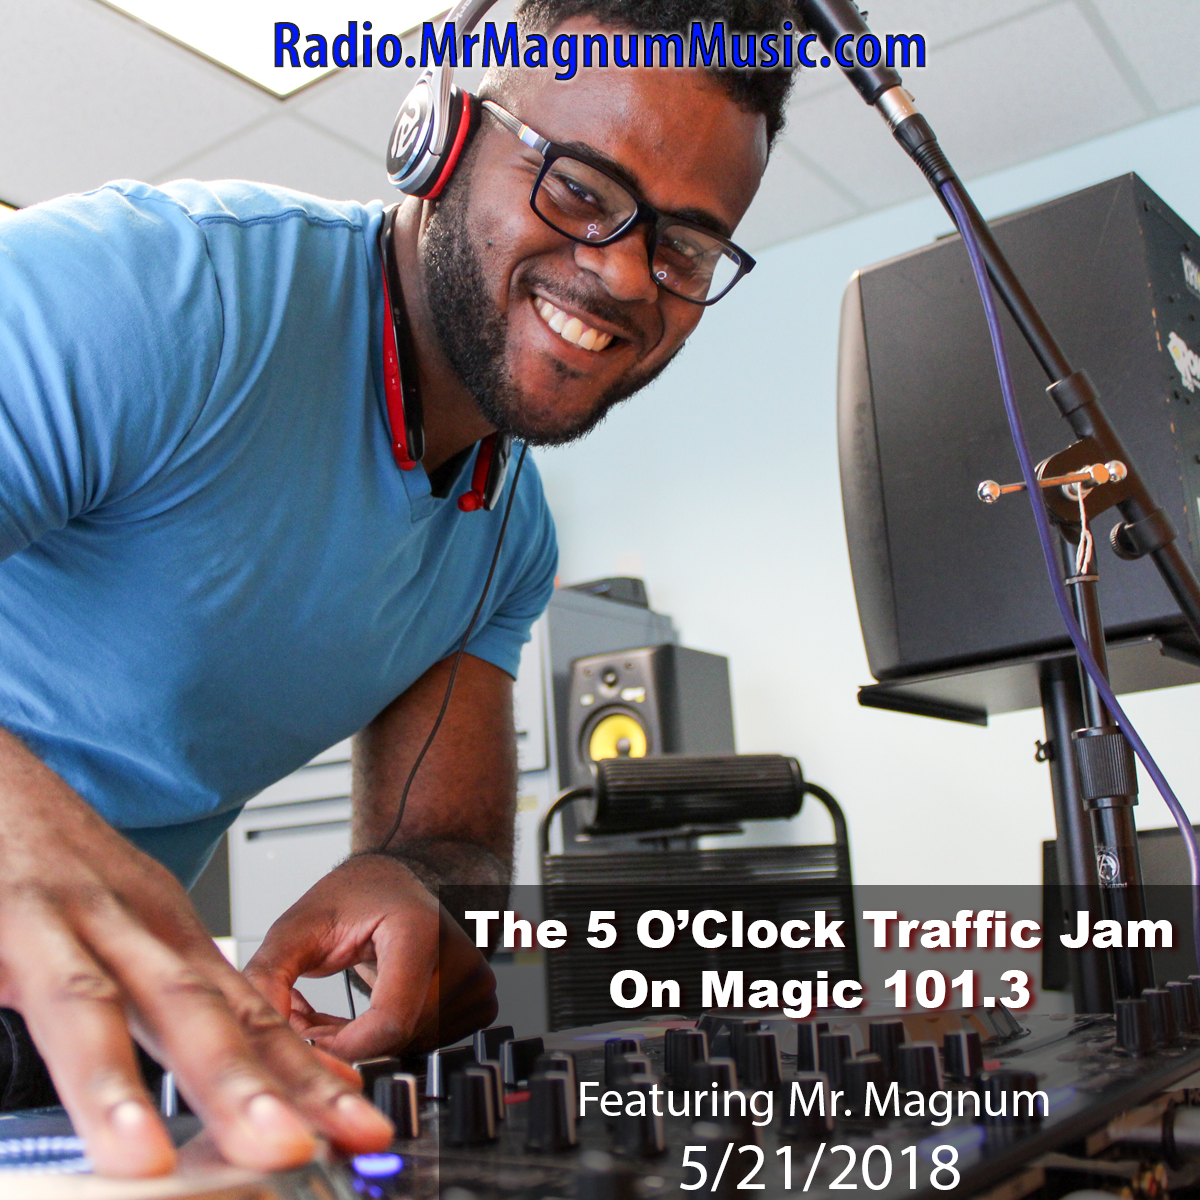 The 5 O'Clock Traffic Jam 20180521 featuring Gainesville's #1 DJ, Mr. Magnum on Magic 101.3